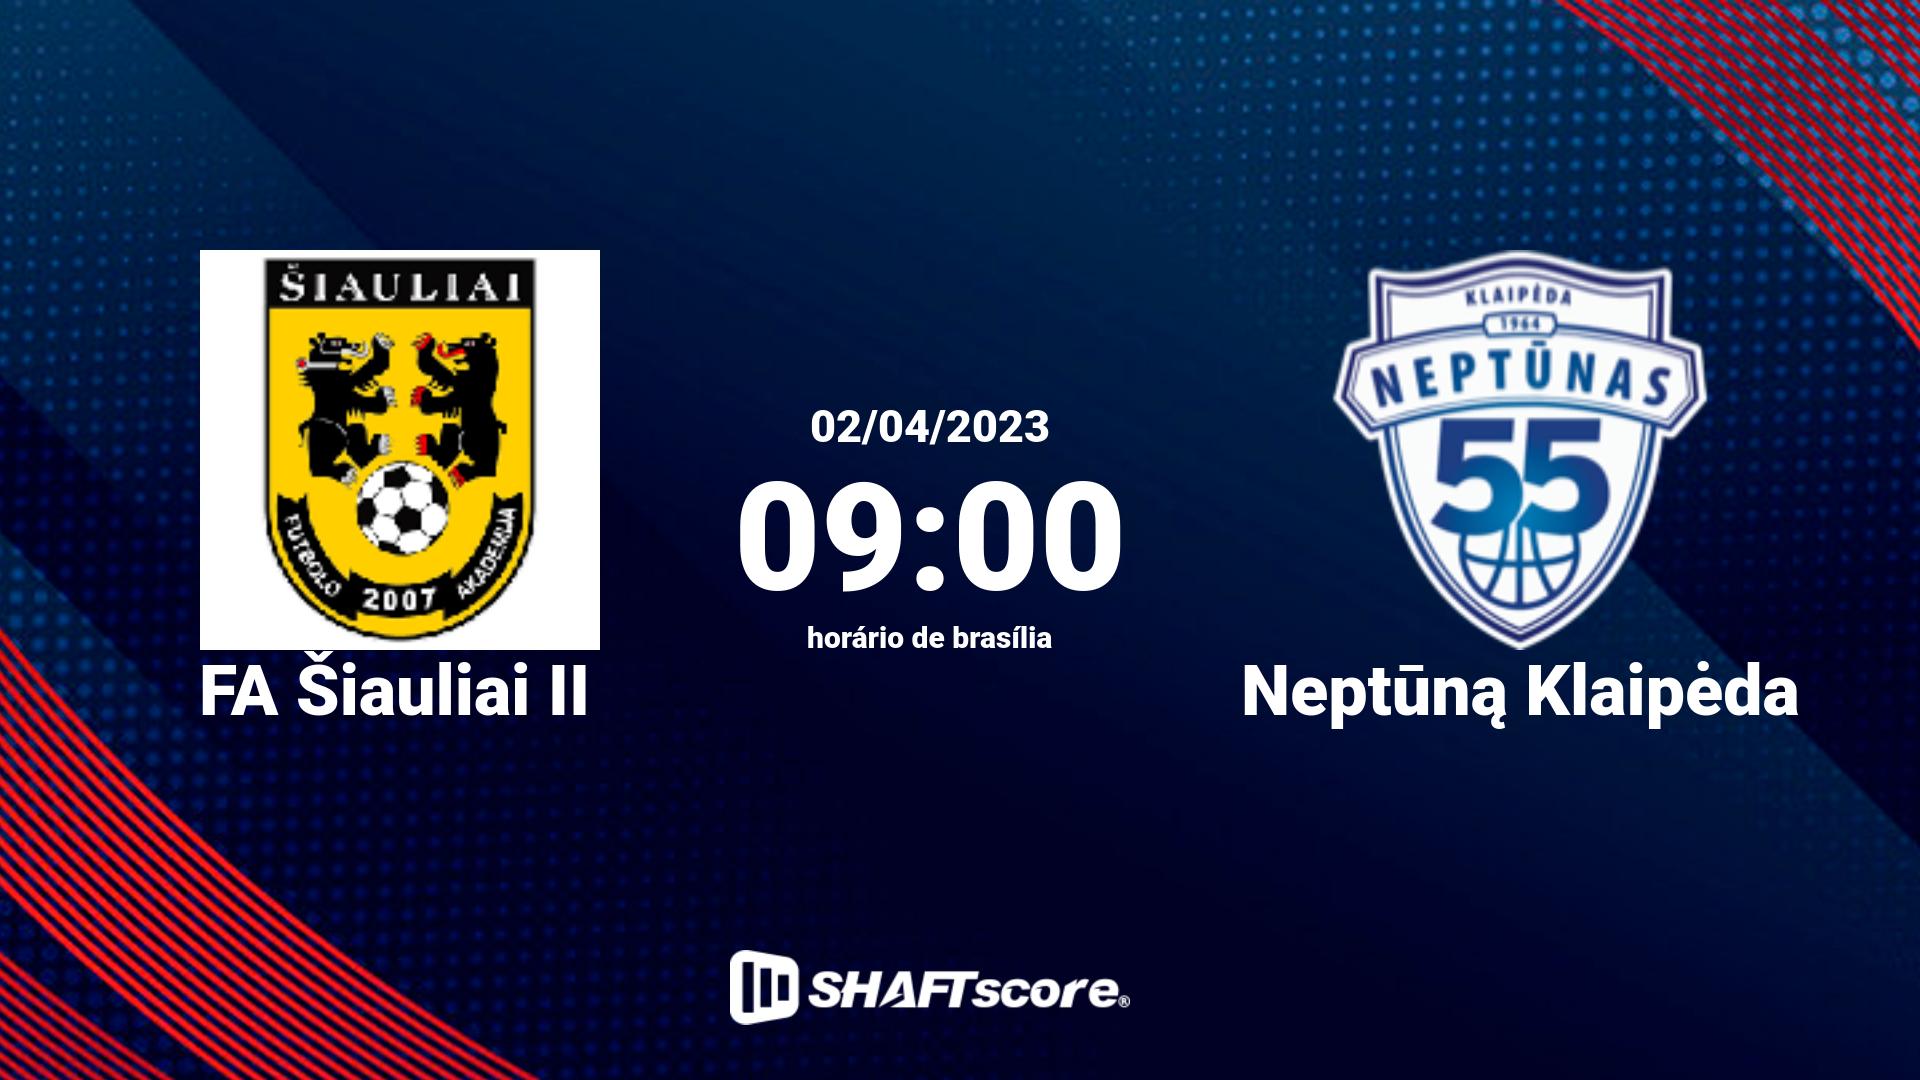 Estatísticas do jogo FA Šiauliai II vs Neptūną Klaipėda 02.04 09:00